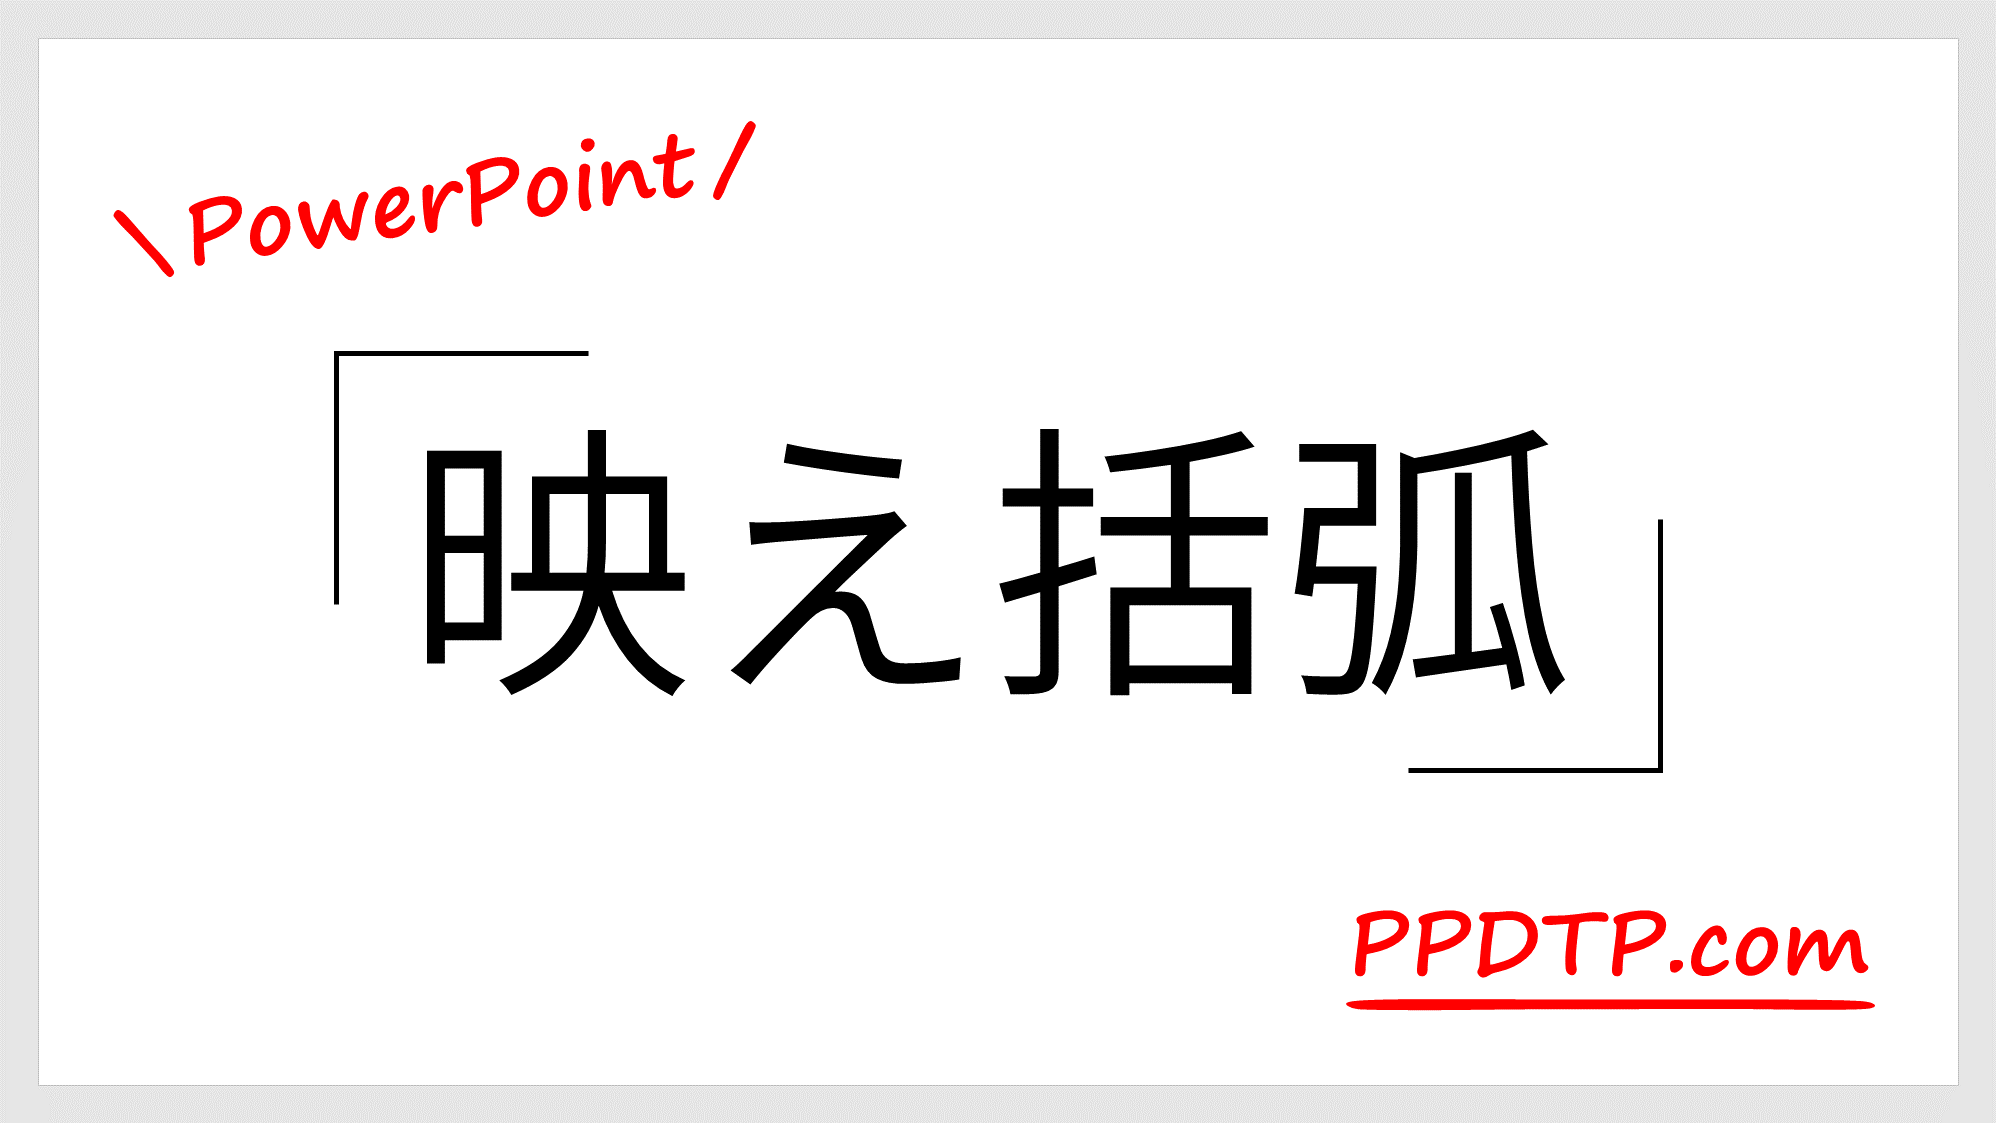 Powerpoint 映え括弧 で見出しを目立たせる方法 Ppdtp